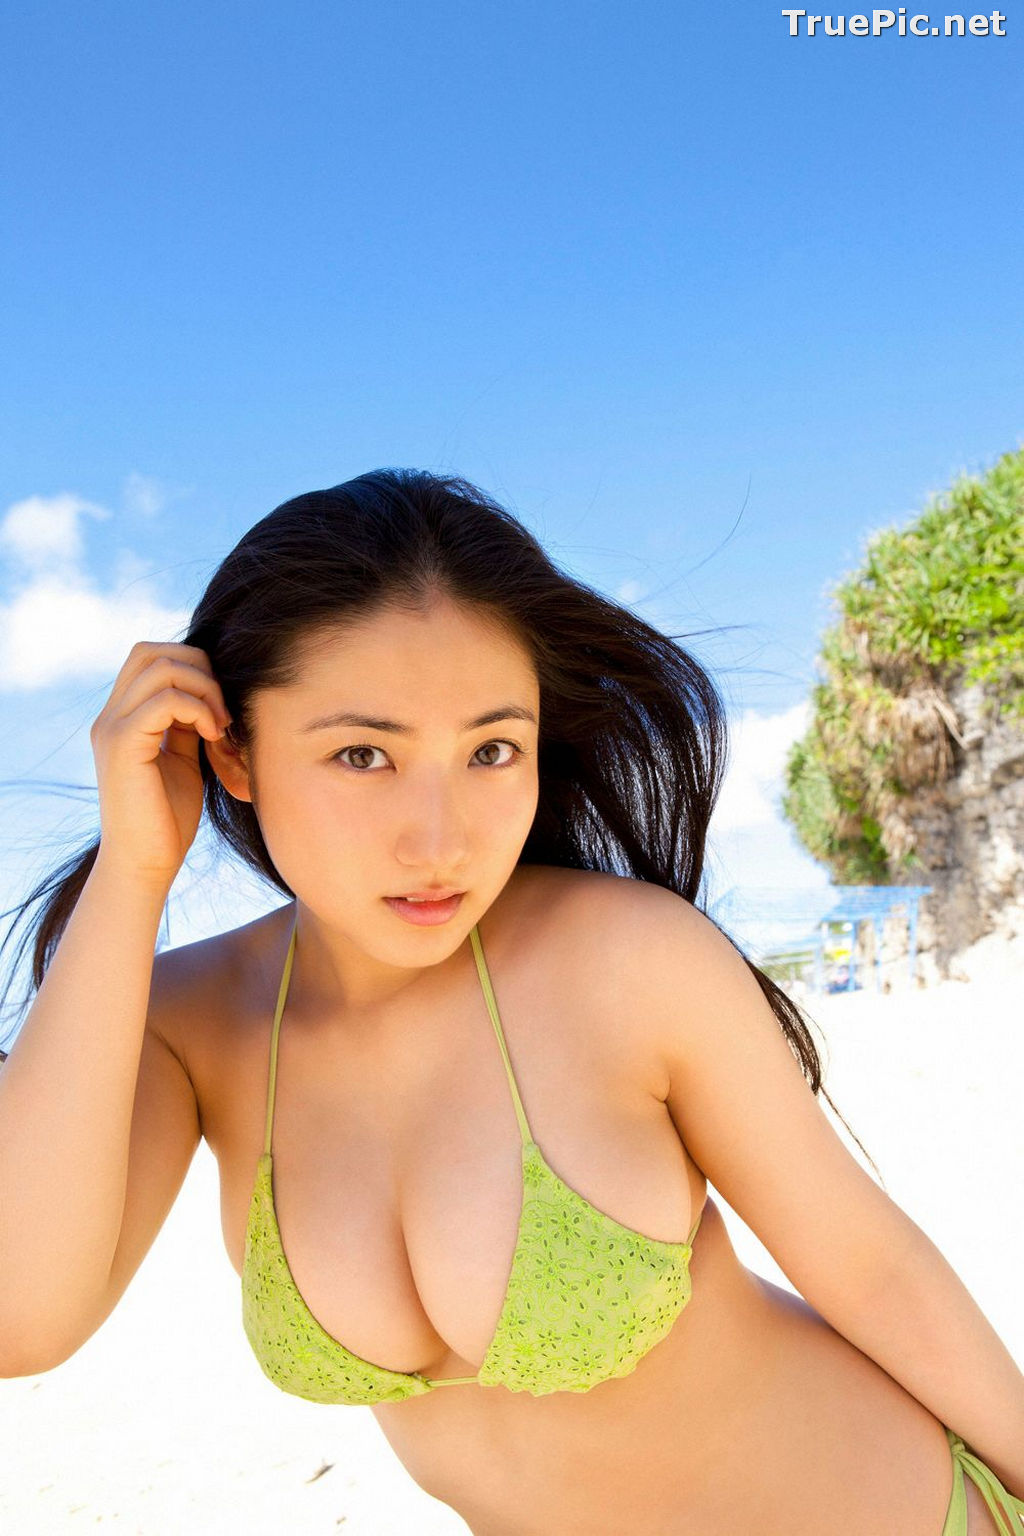 Image [YS Web] Vol.429 - Japanese Actress and Gravure Idol - Irie Saaya - TruePic.net - Picture-96